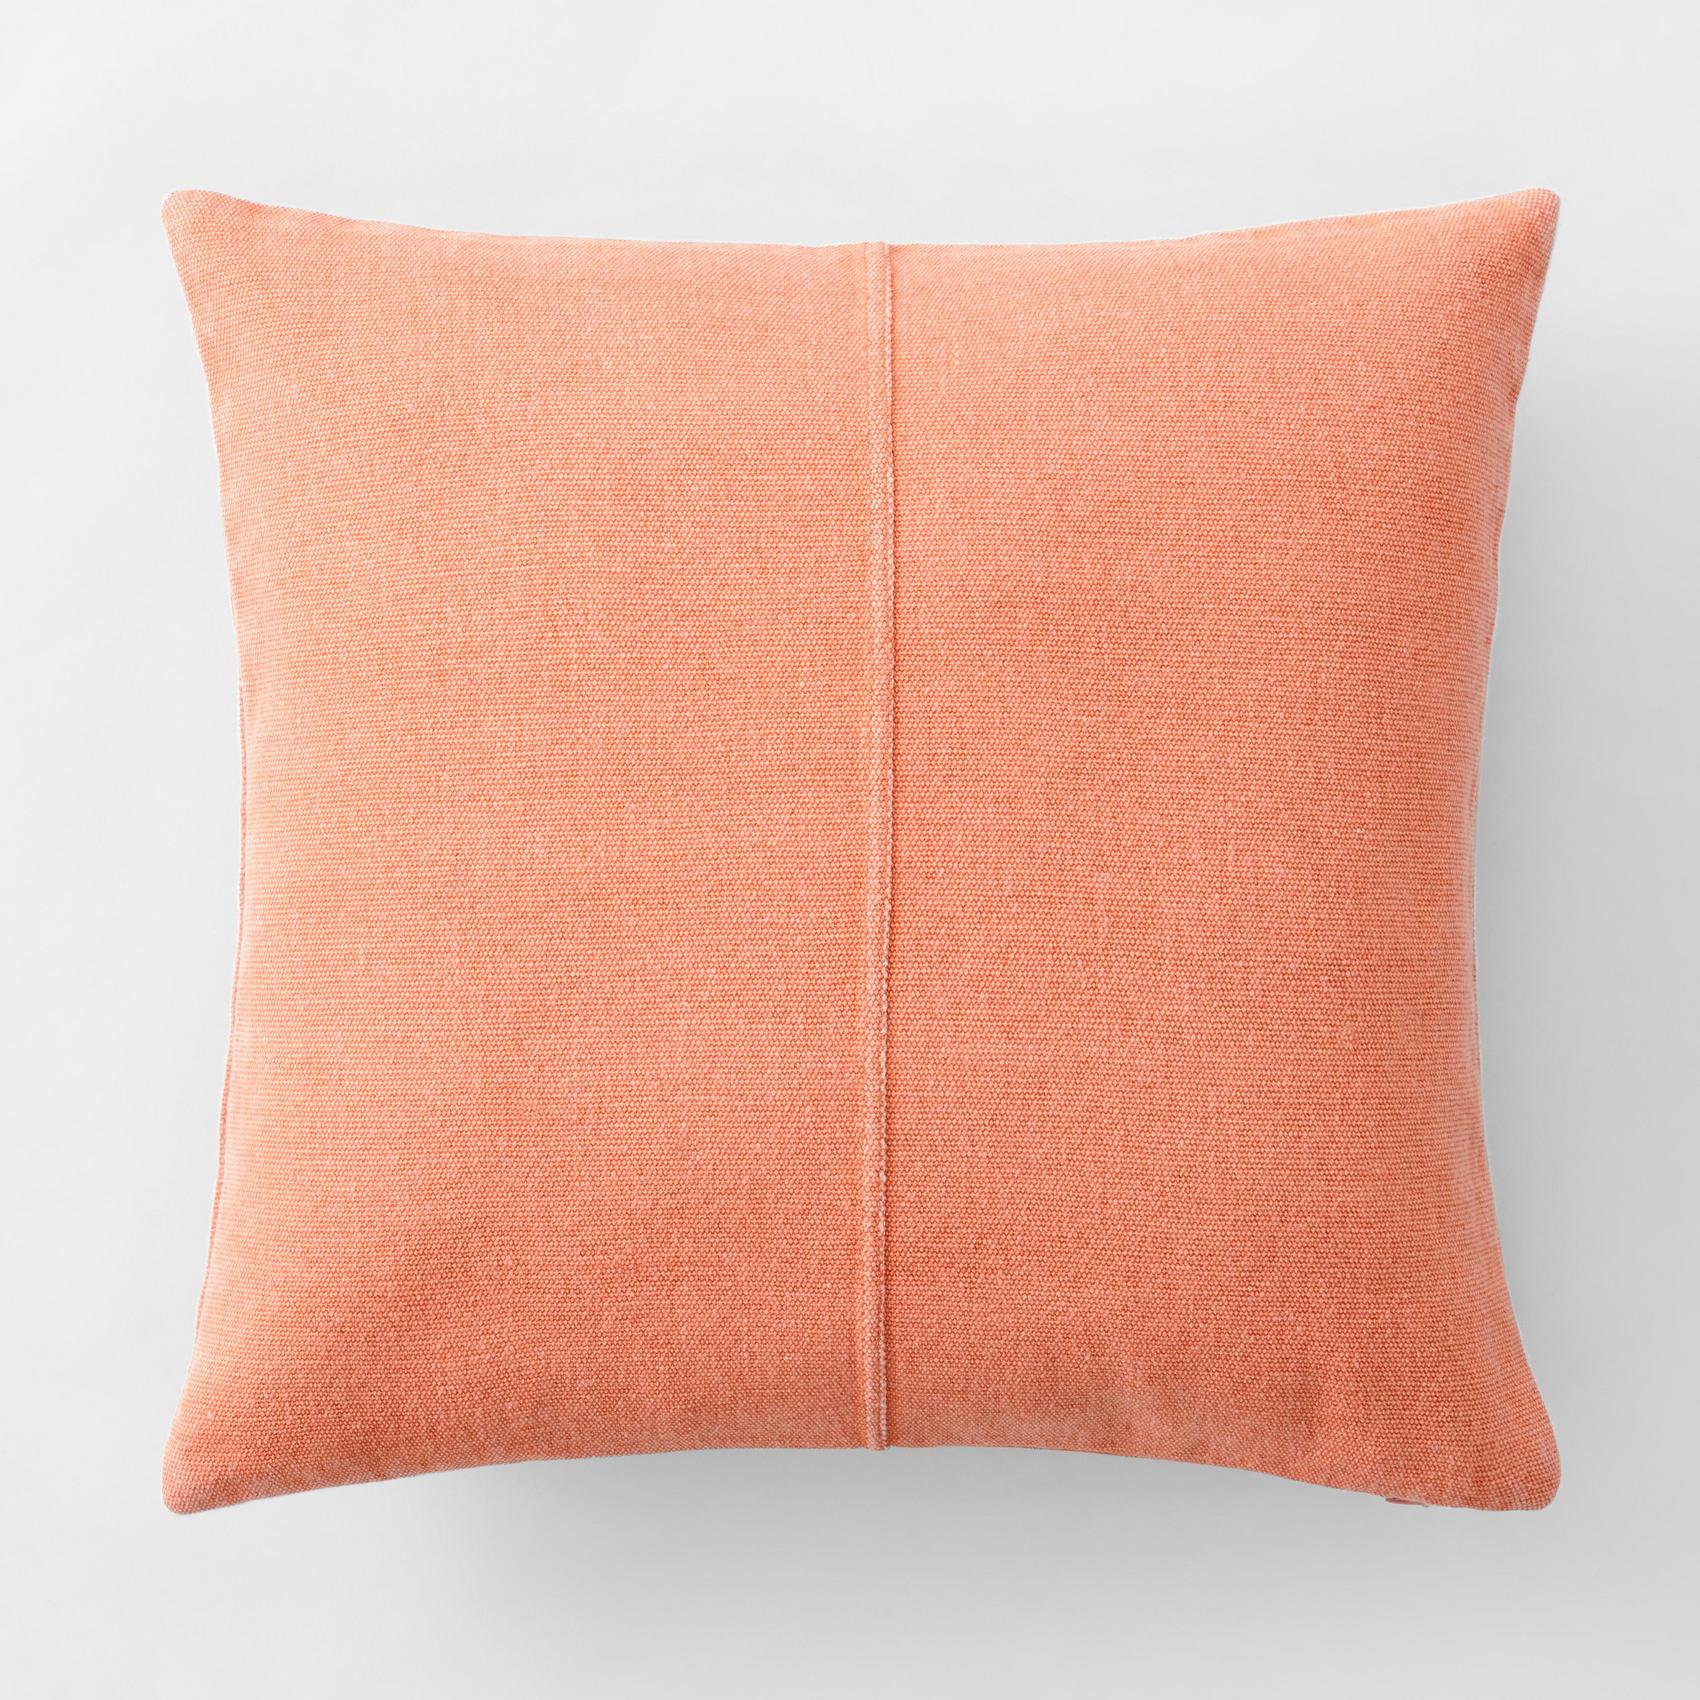 Sheridan Helston Square Cushion in Antique Rose Size: 45cm x 45cm @Sheridan Rewards